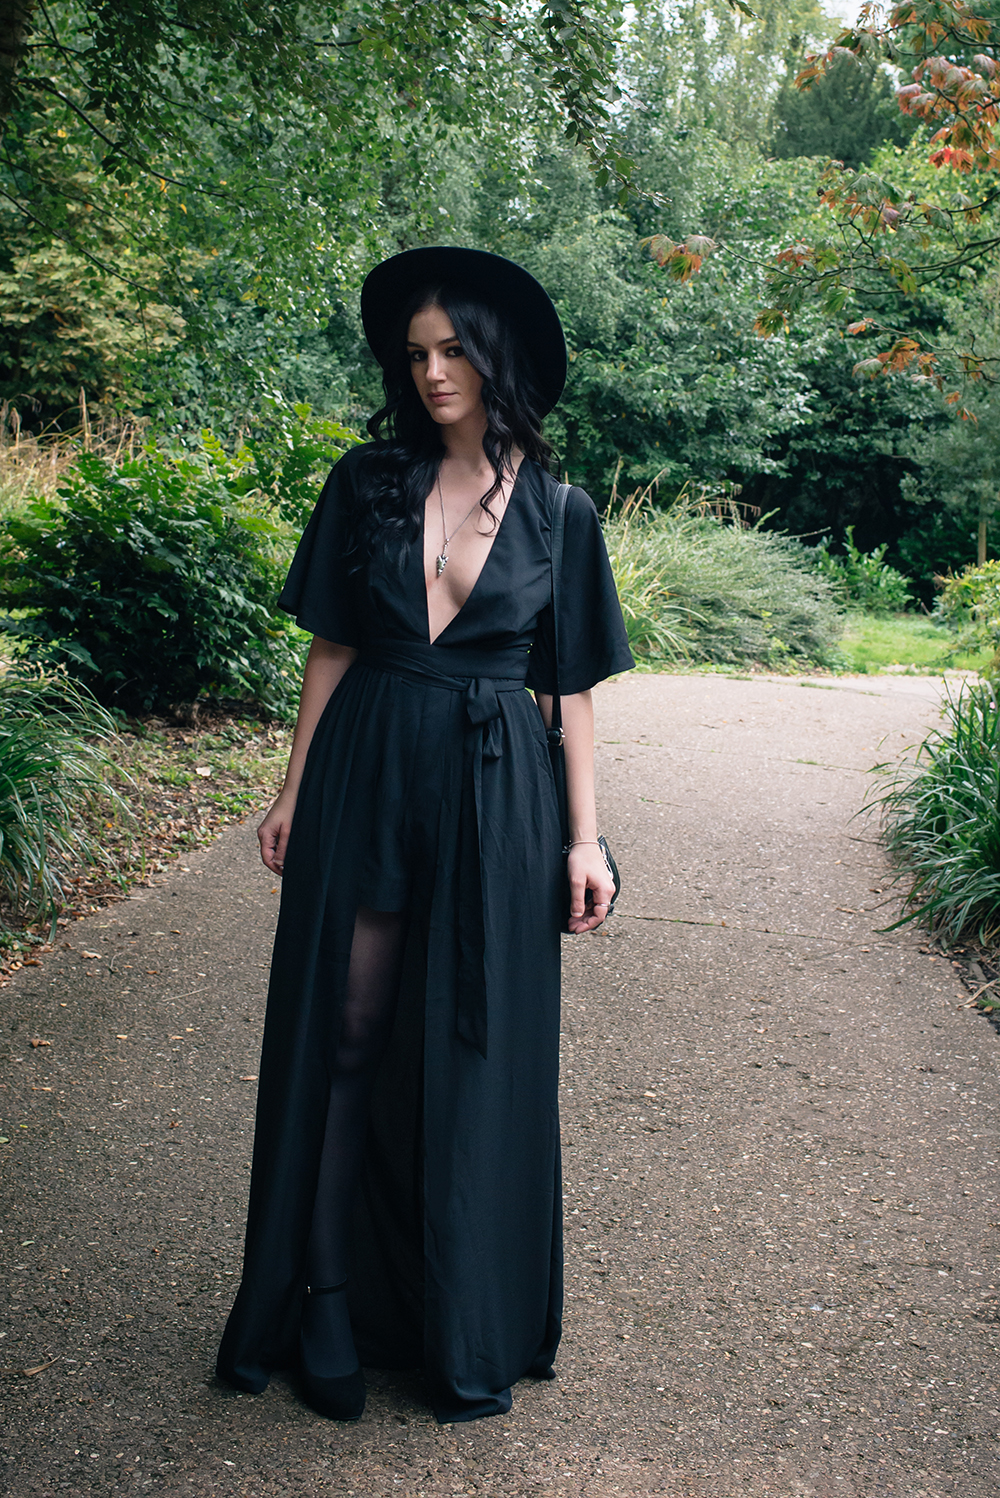 Fashion blogger Stephanie of FAIIINT wearing Tobi black maxi witchy kimono dress and wide brim hat. Dark gothic street style outfit.